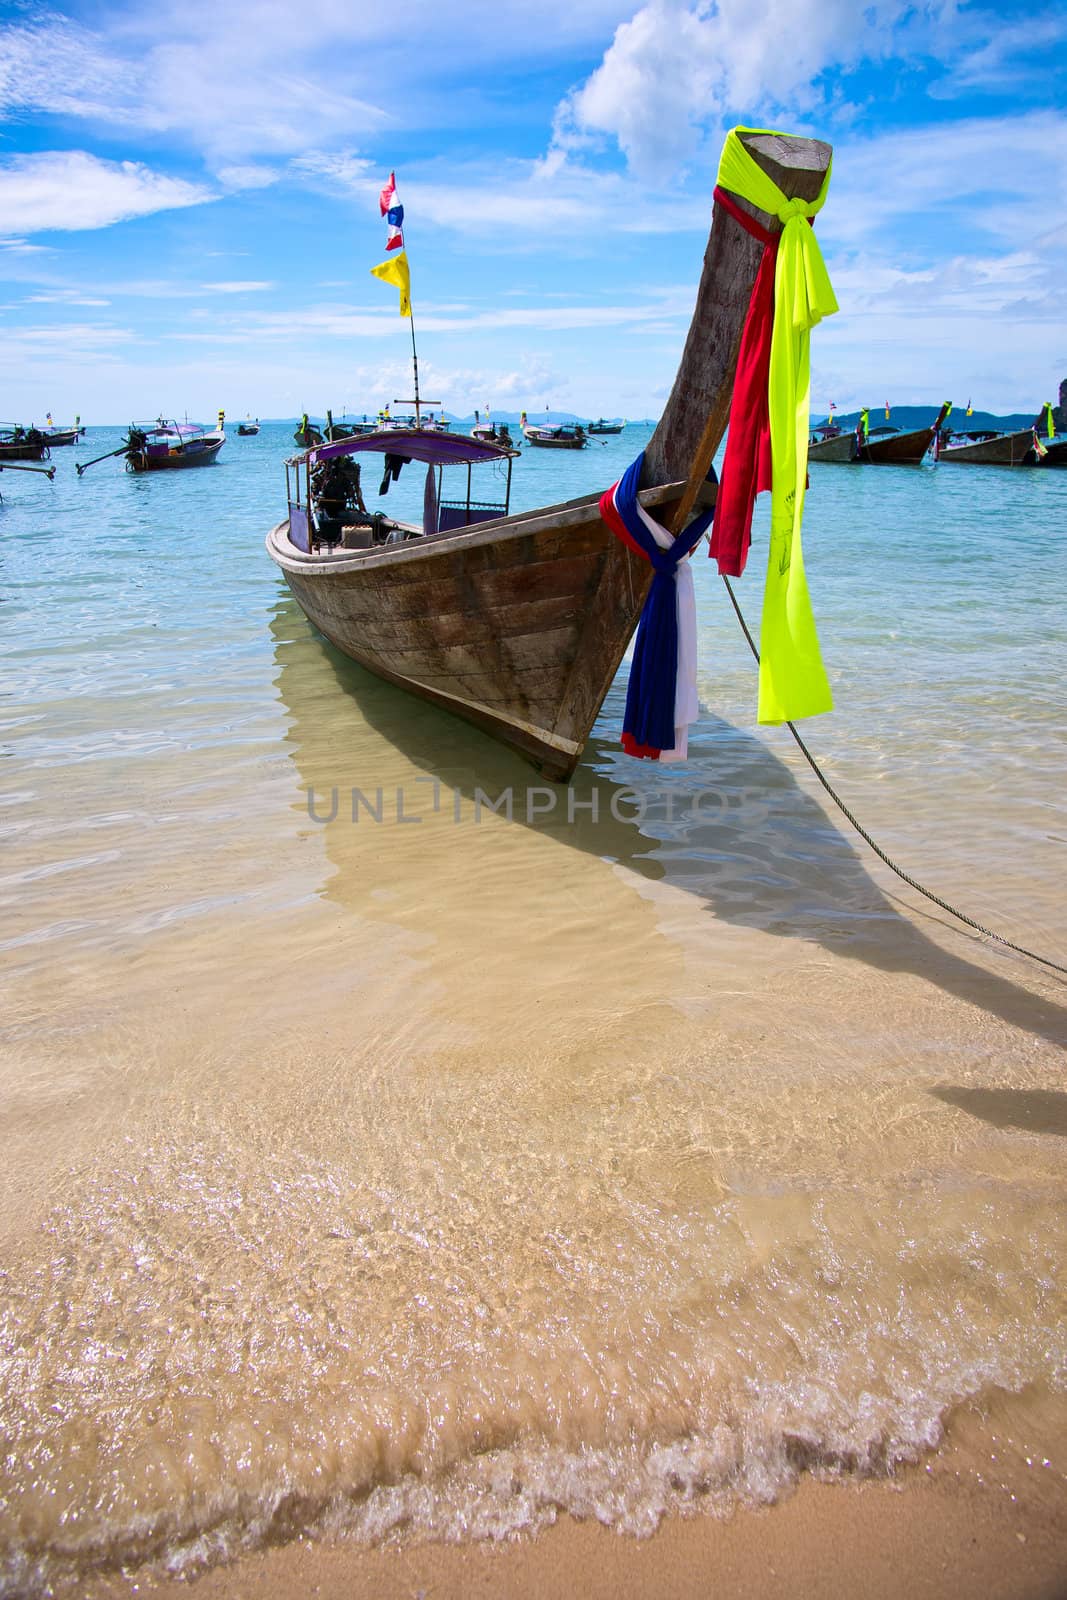 Longtail boat on the beach, Krabi province, Thailand